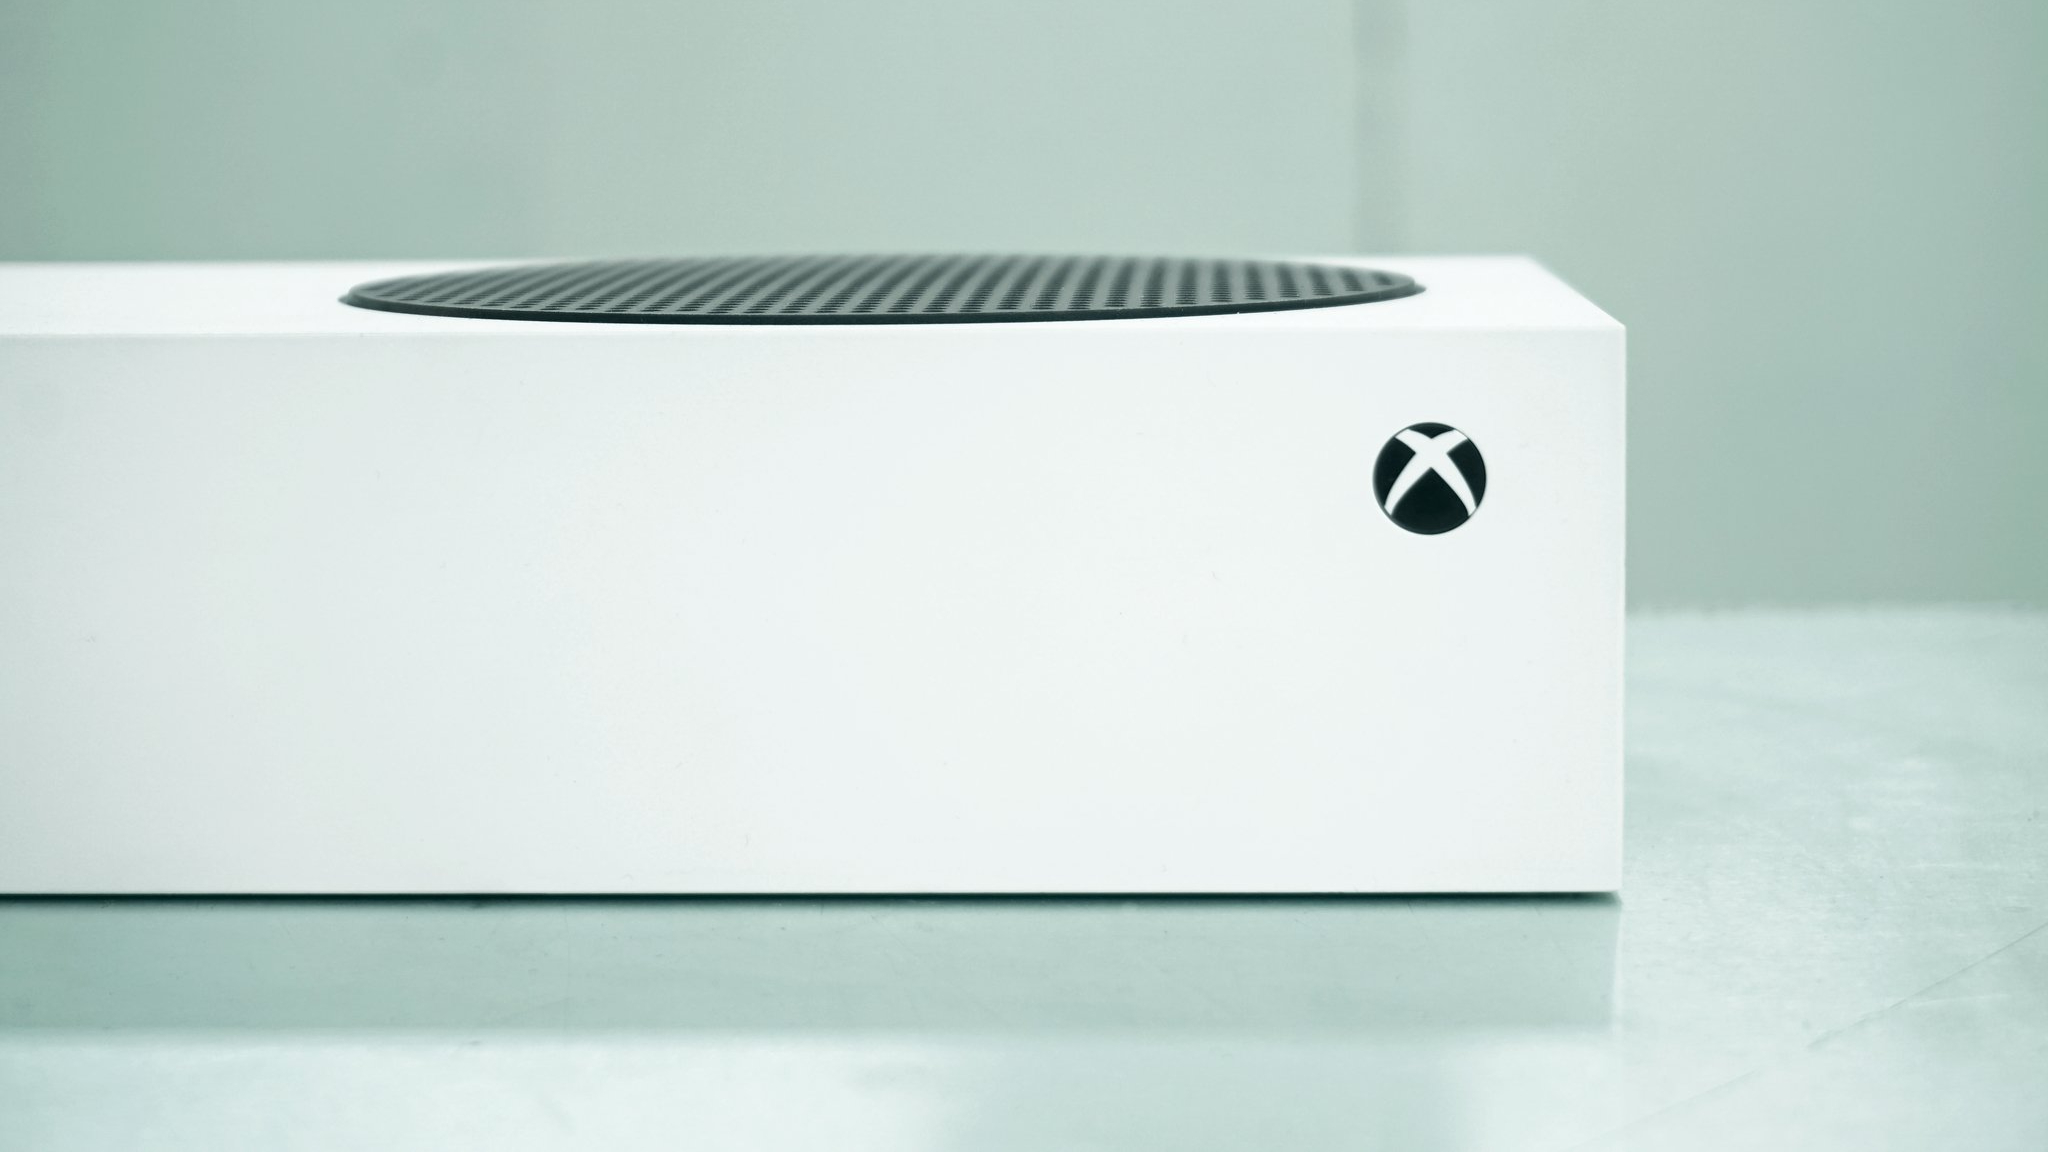 Microsoft Xbox Series X gets first price cut at Verizon